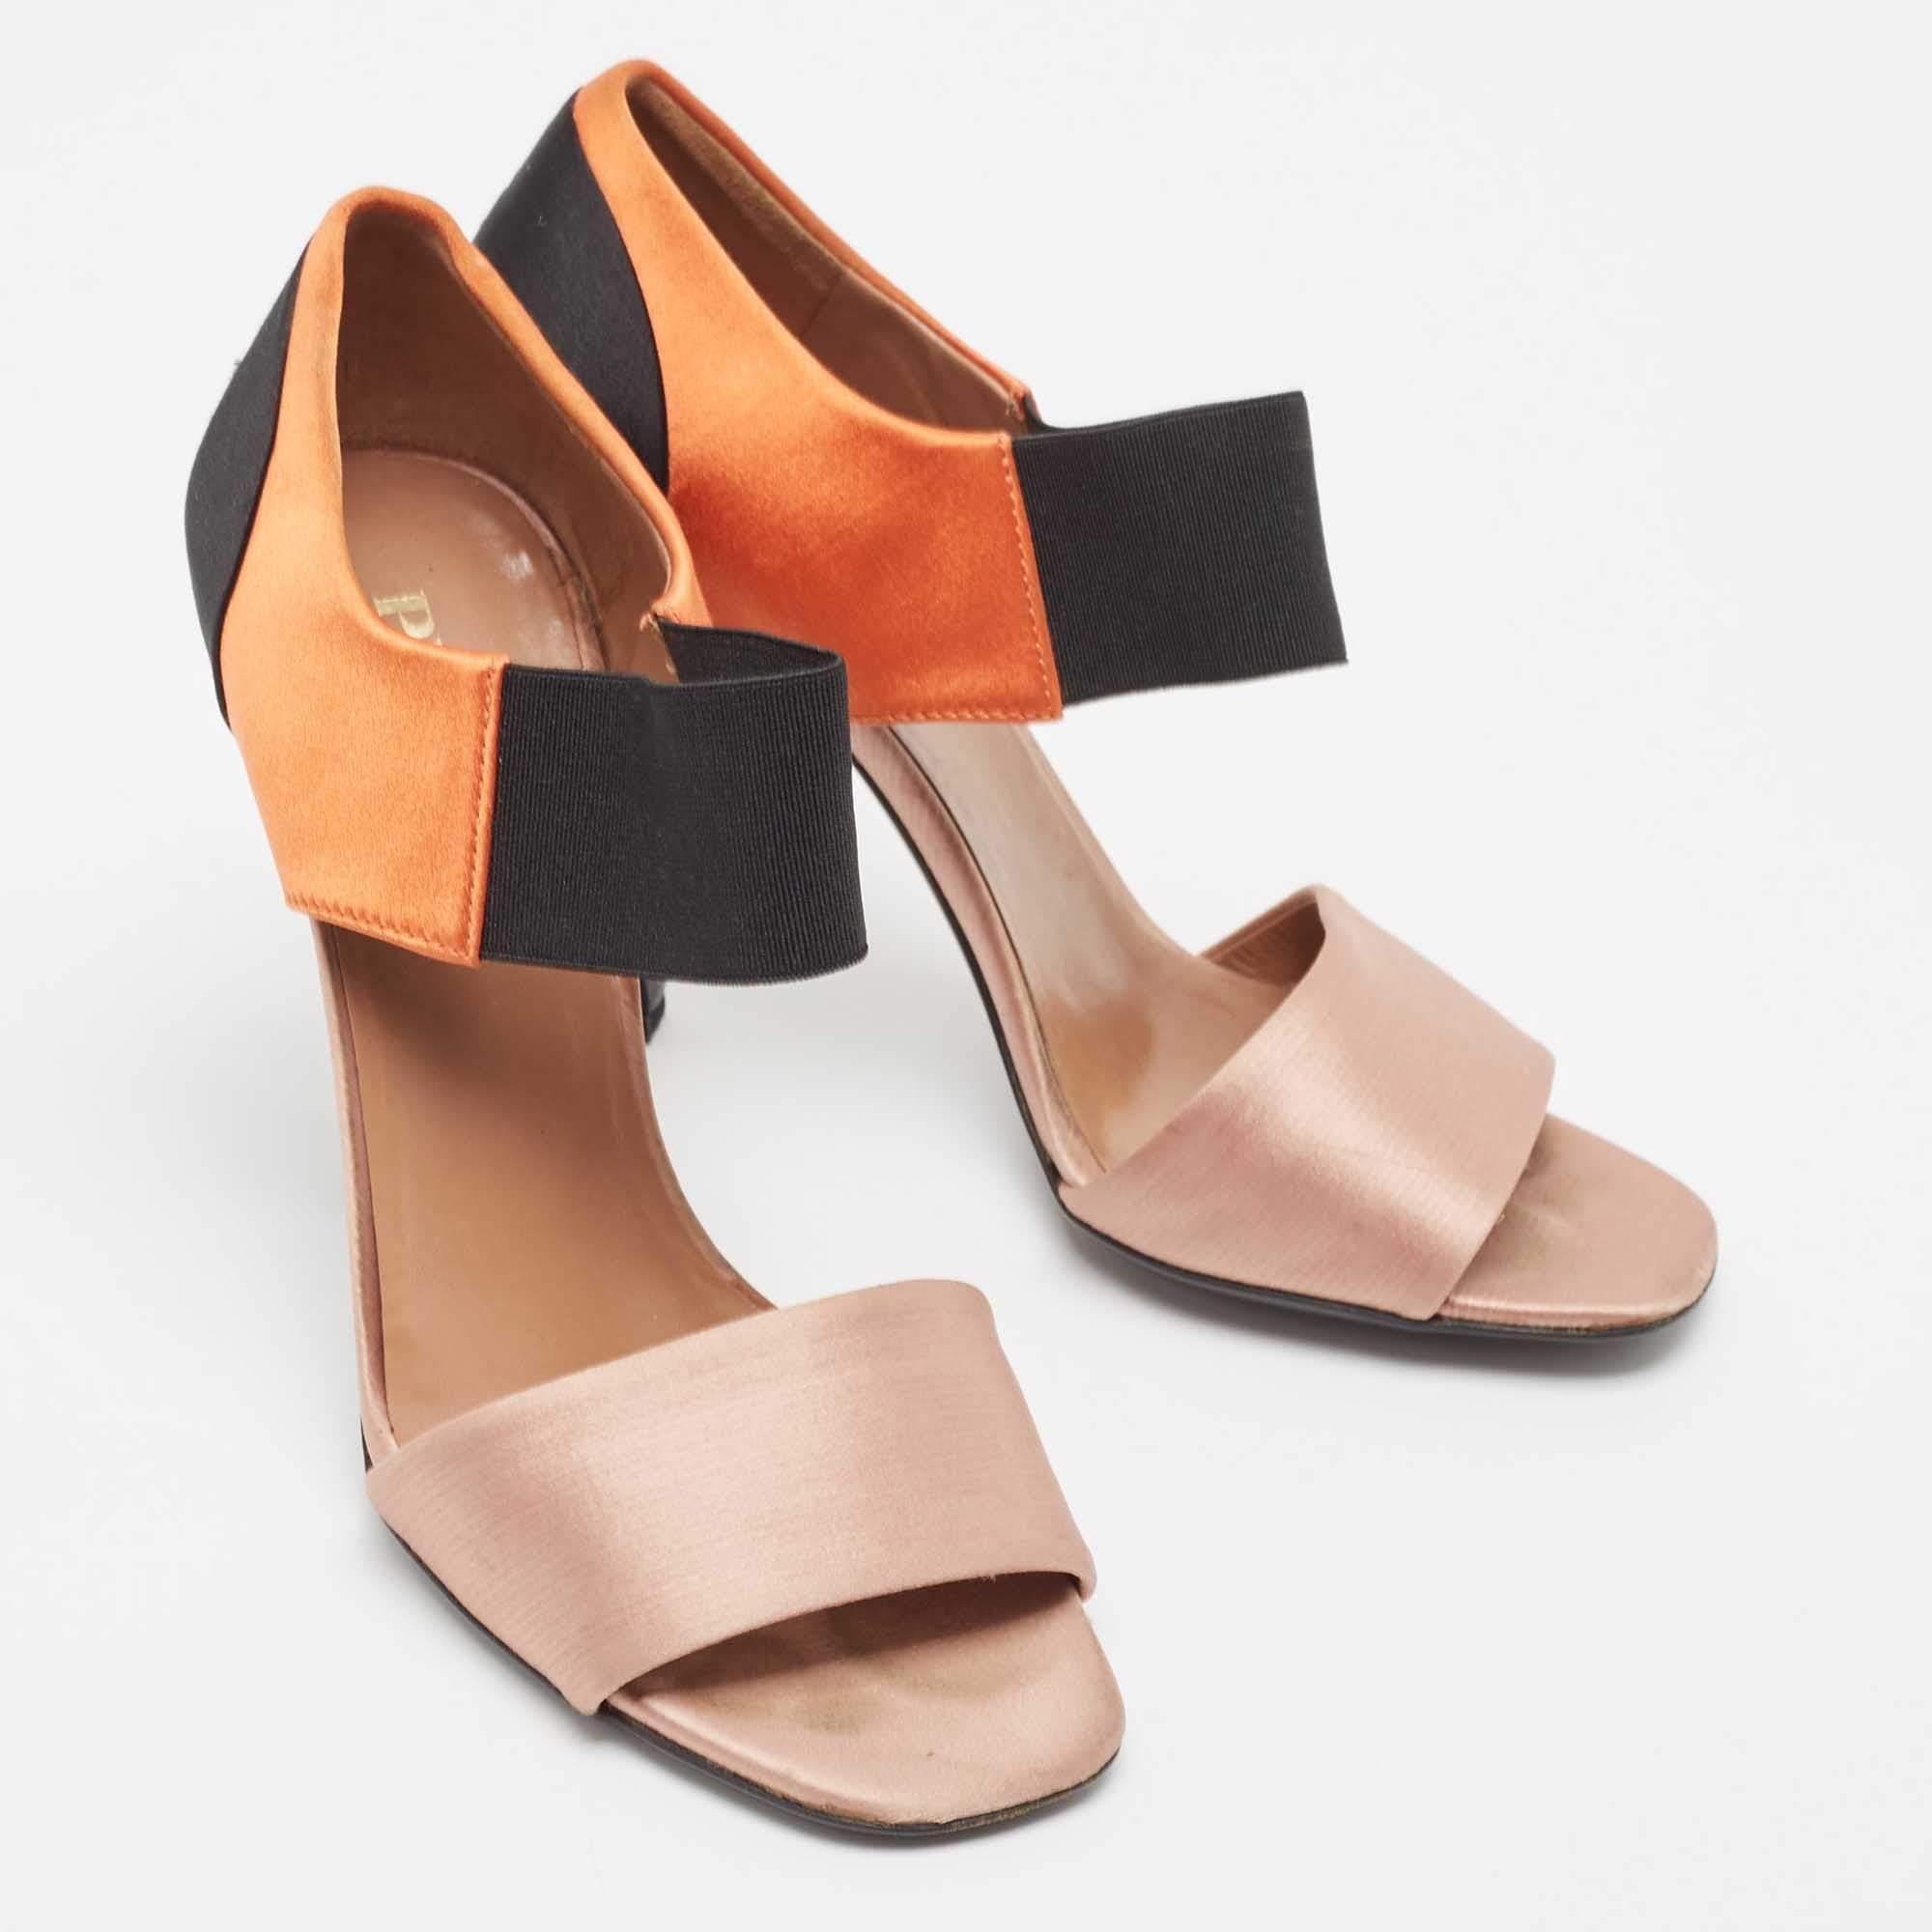 Prada Tricolor Satin Ankle Wrap Sandals Size 36 In Good Condition For Sale In Dubai, Al Qouz 2